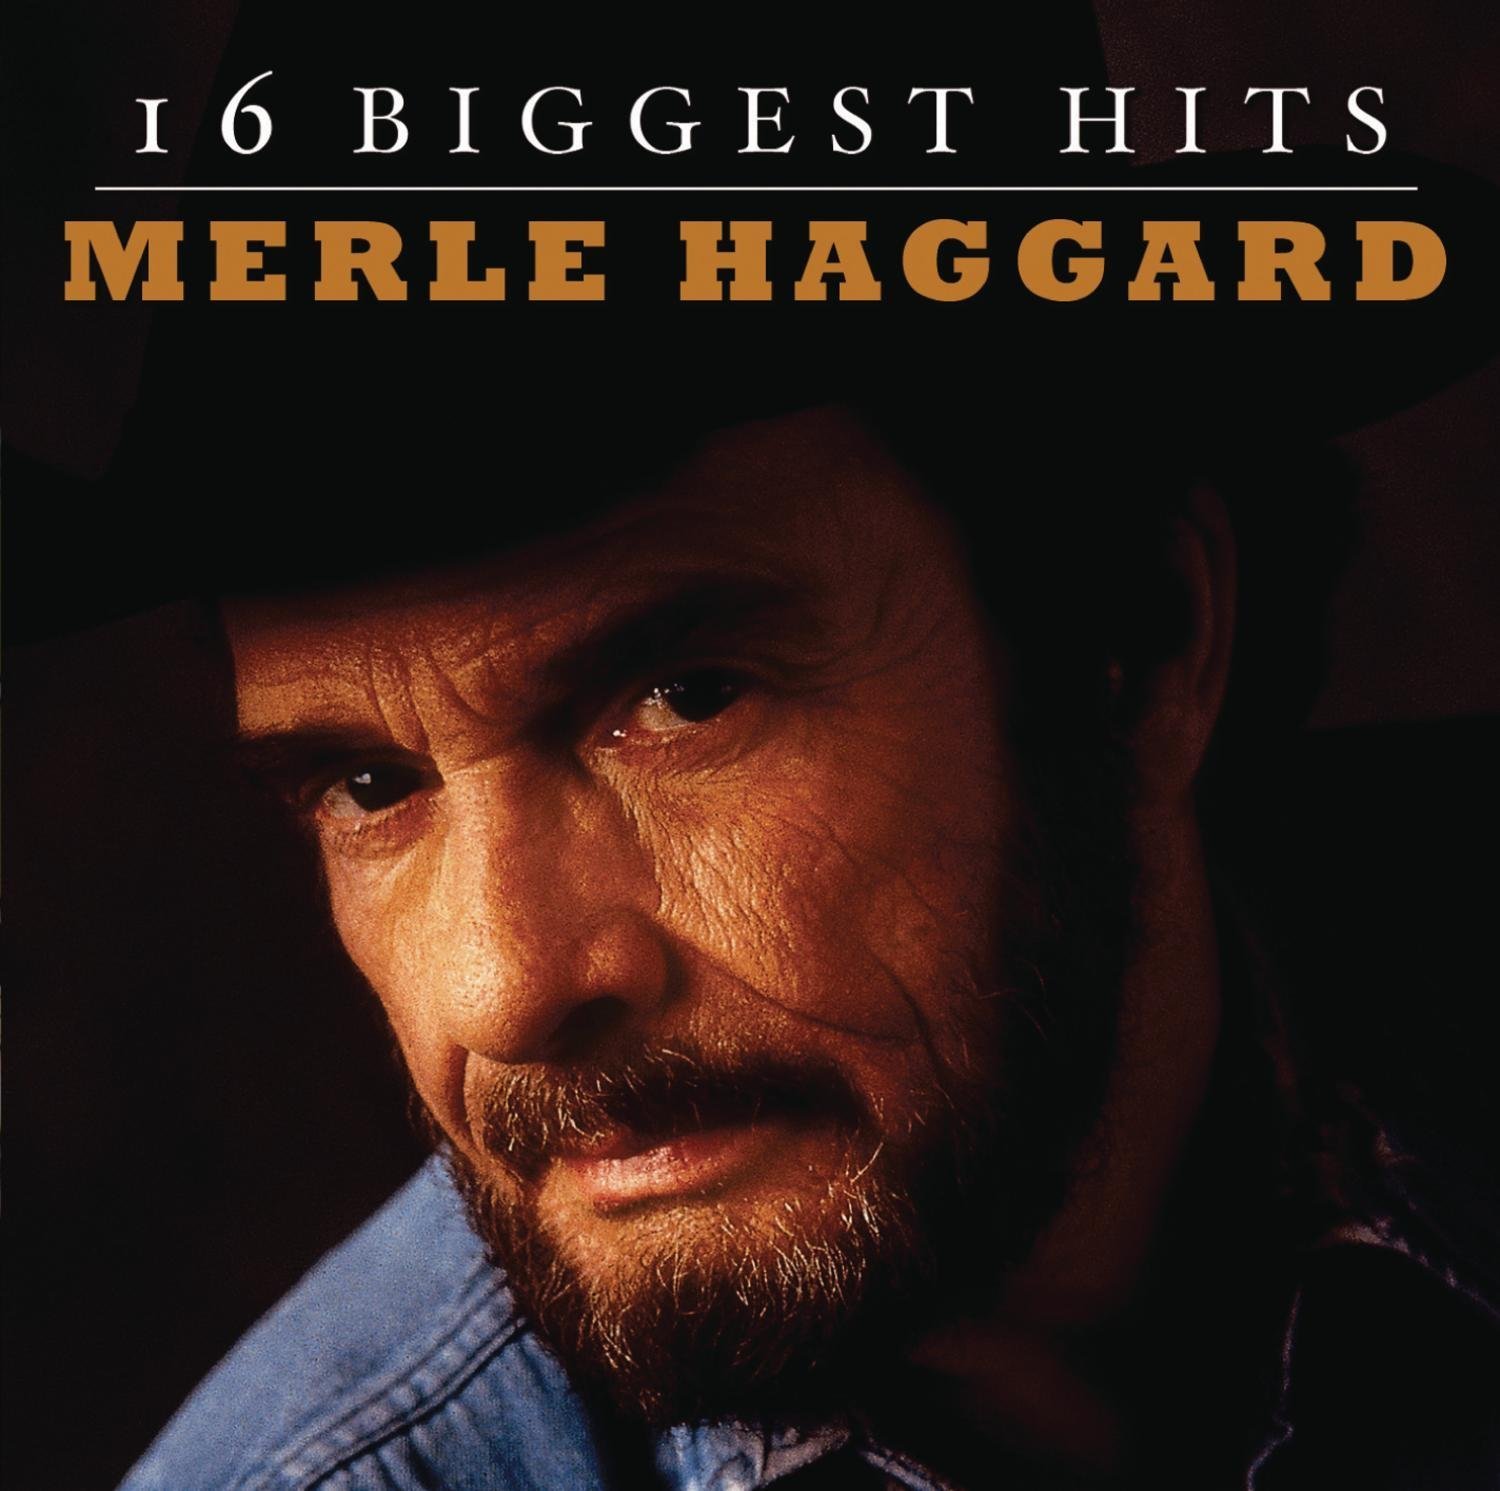 Merle Haggard 16 Biggest Hits - CDs